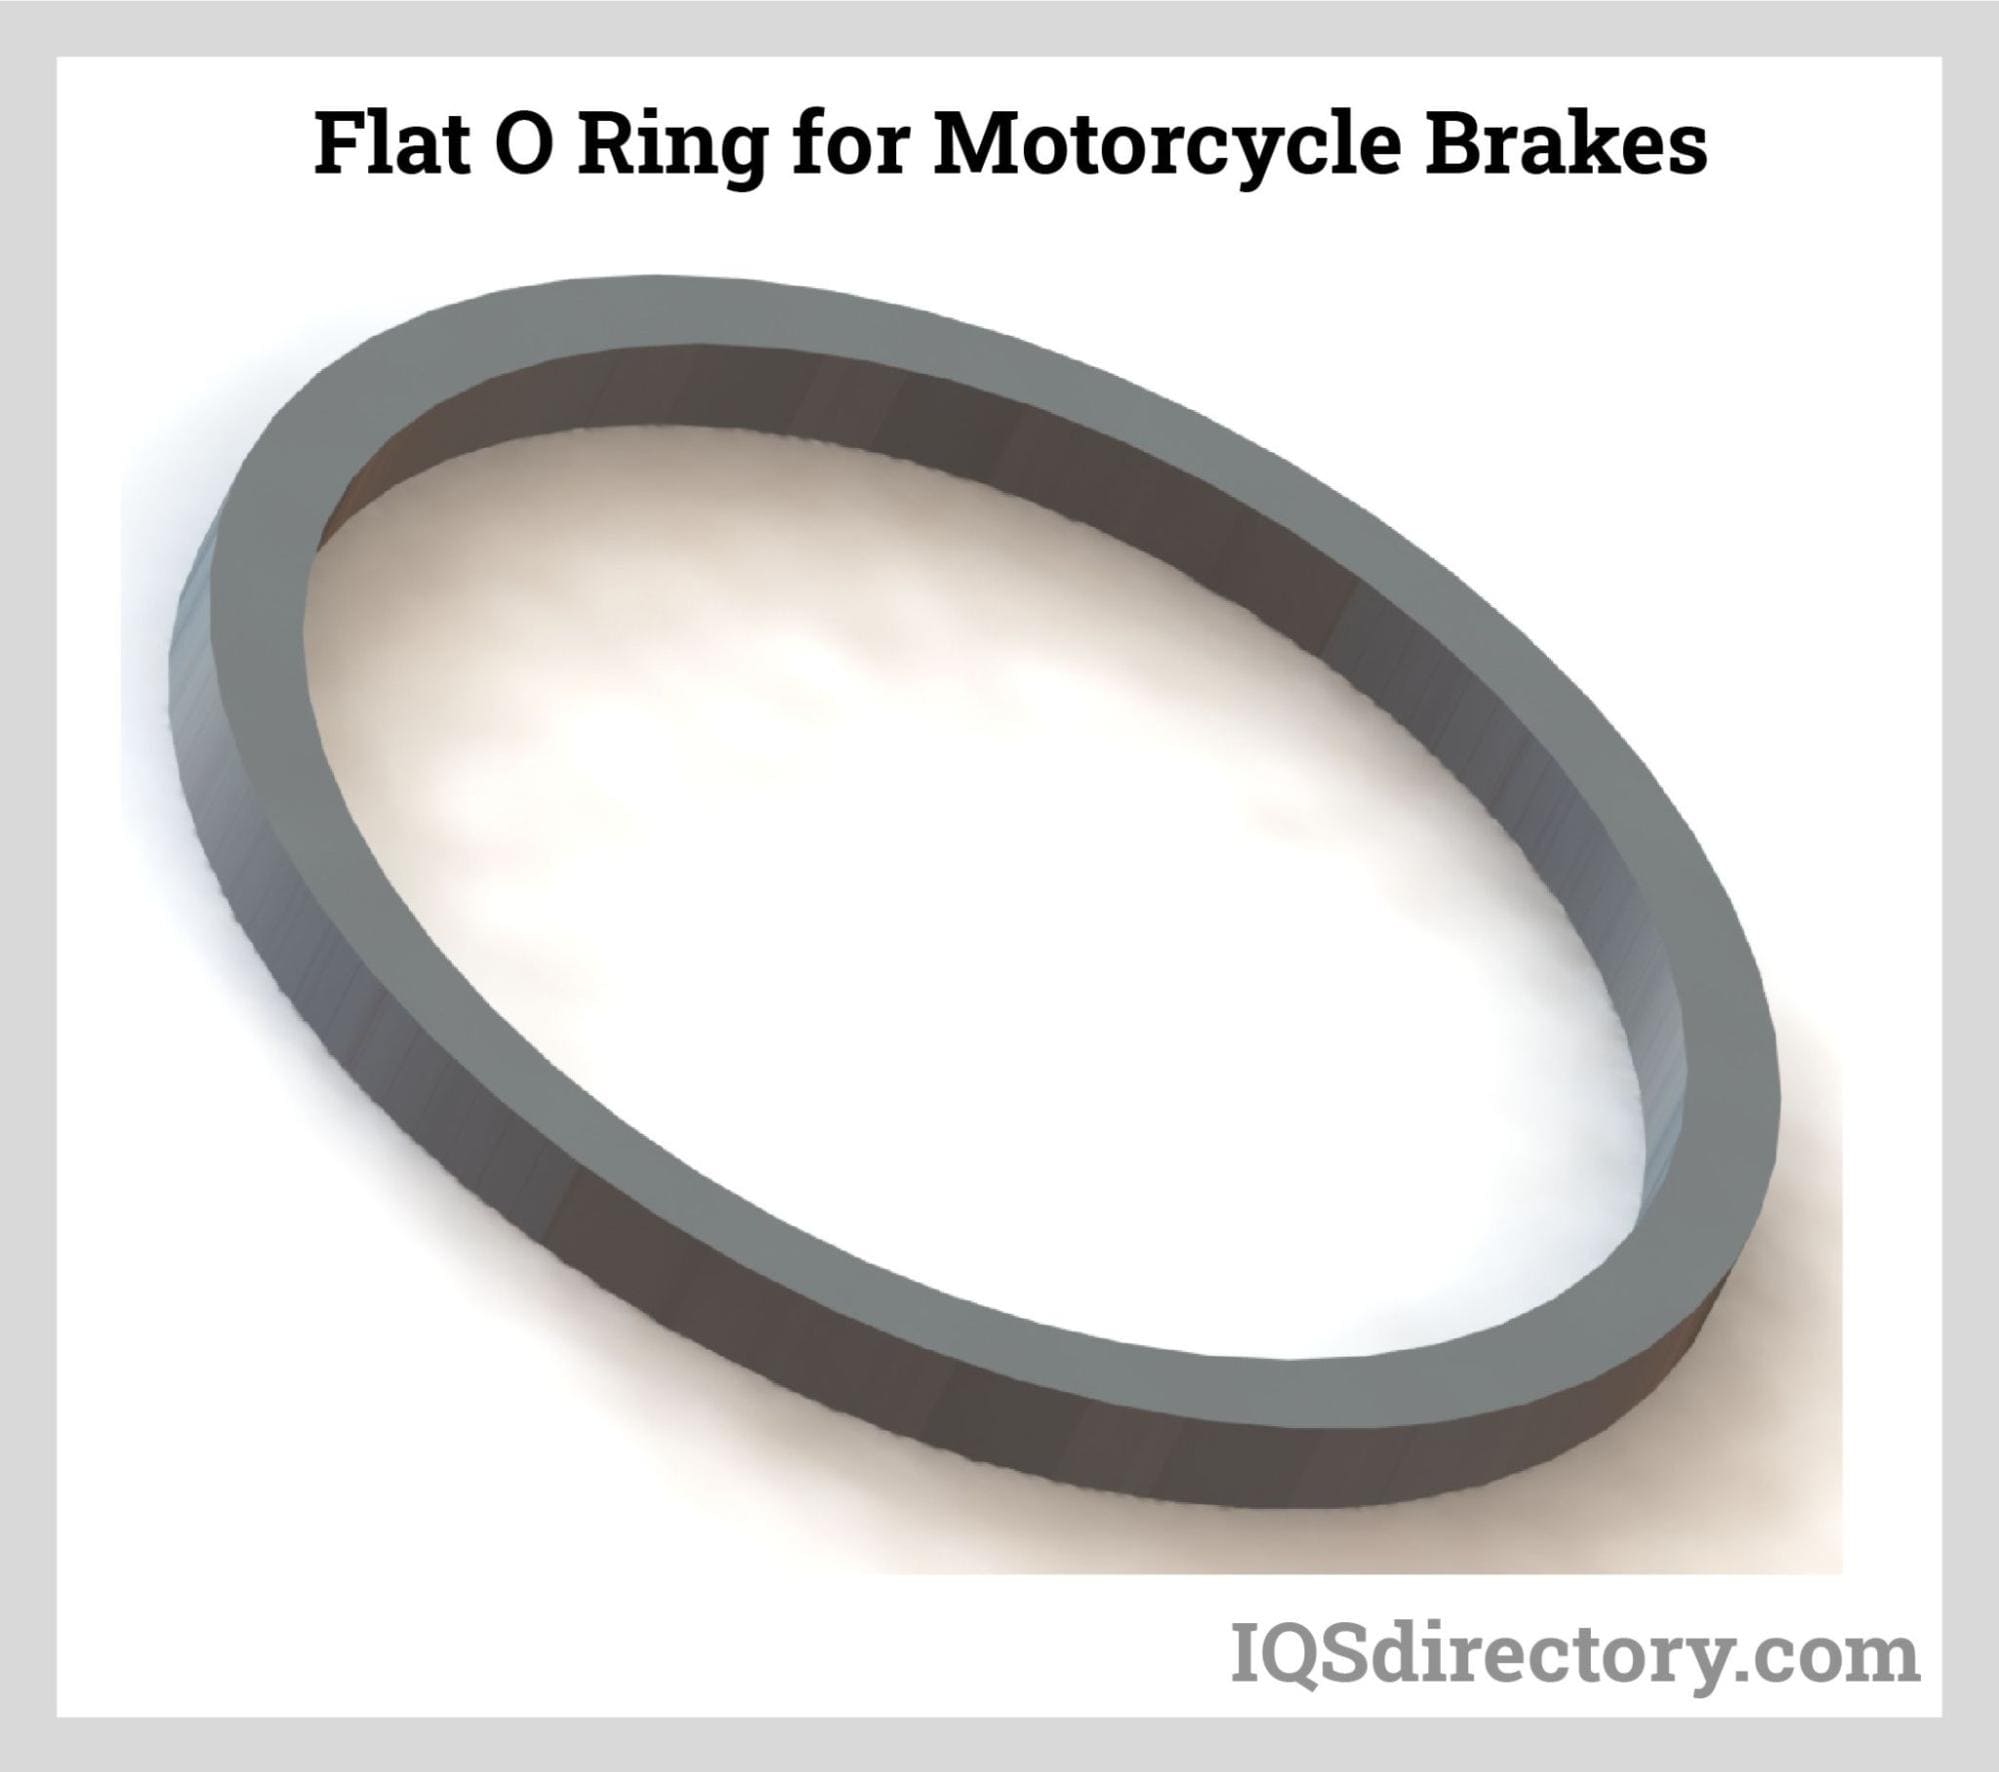 Flat O Ring for Motorcycle Brakes